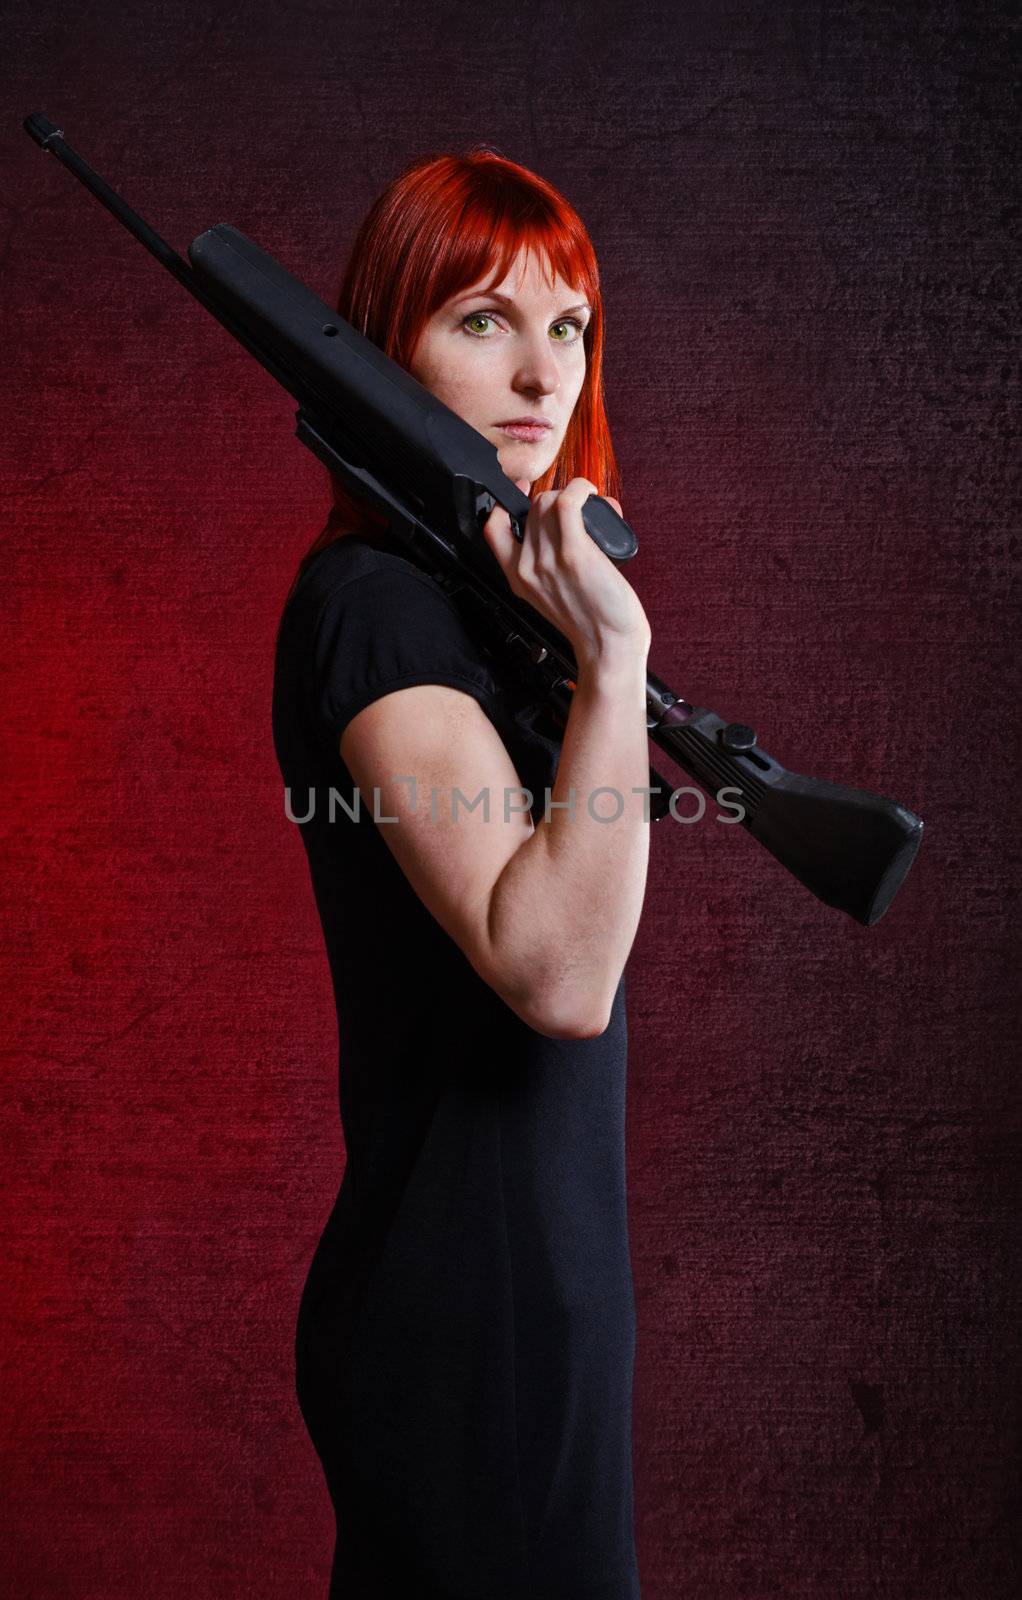 Sniper Woman by petr_malyshev